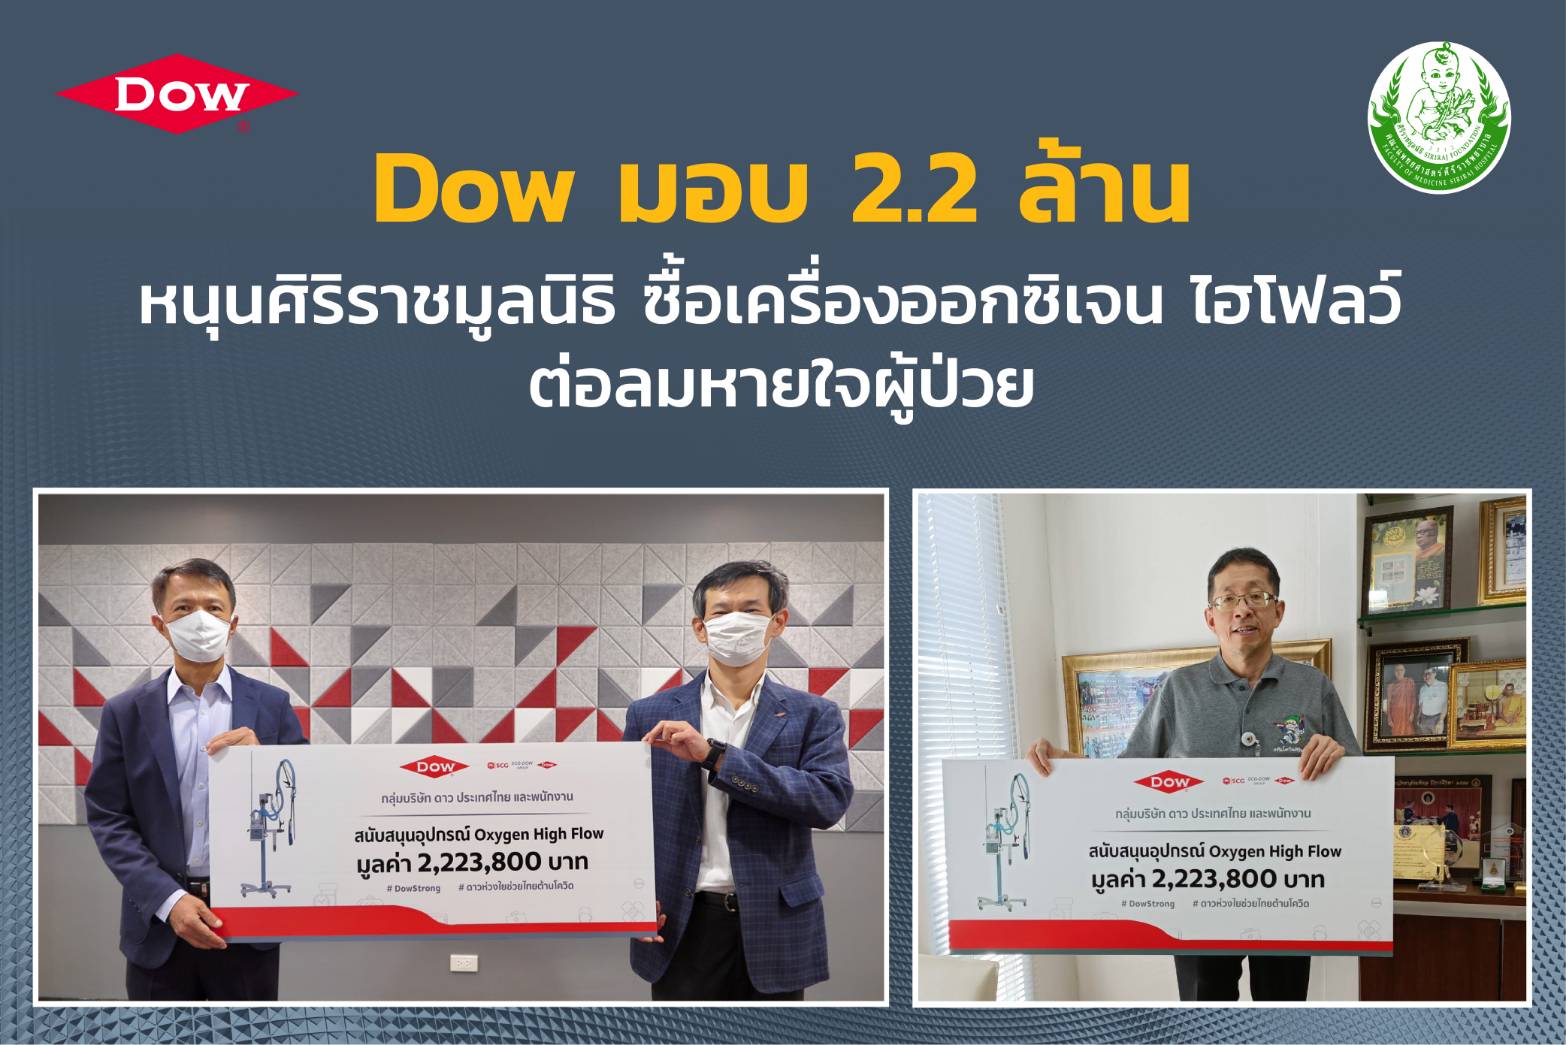 Dowห่วงใย ช่วยไทยต้านโควิด มอบ 2.2 ล้านบาทซื้อเครื่องออกซิเจน ไฮ โฟลว์ ต่อลมหายใจผู้ป่วย